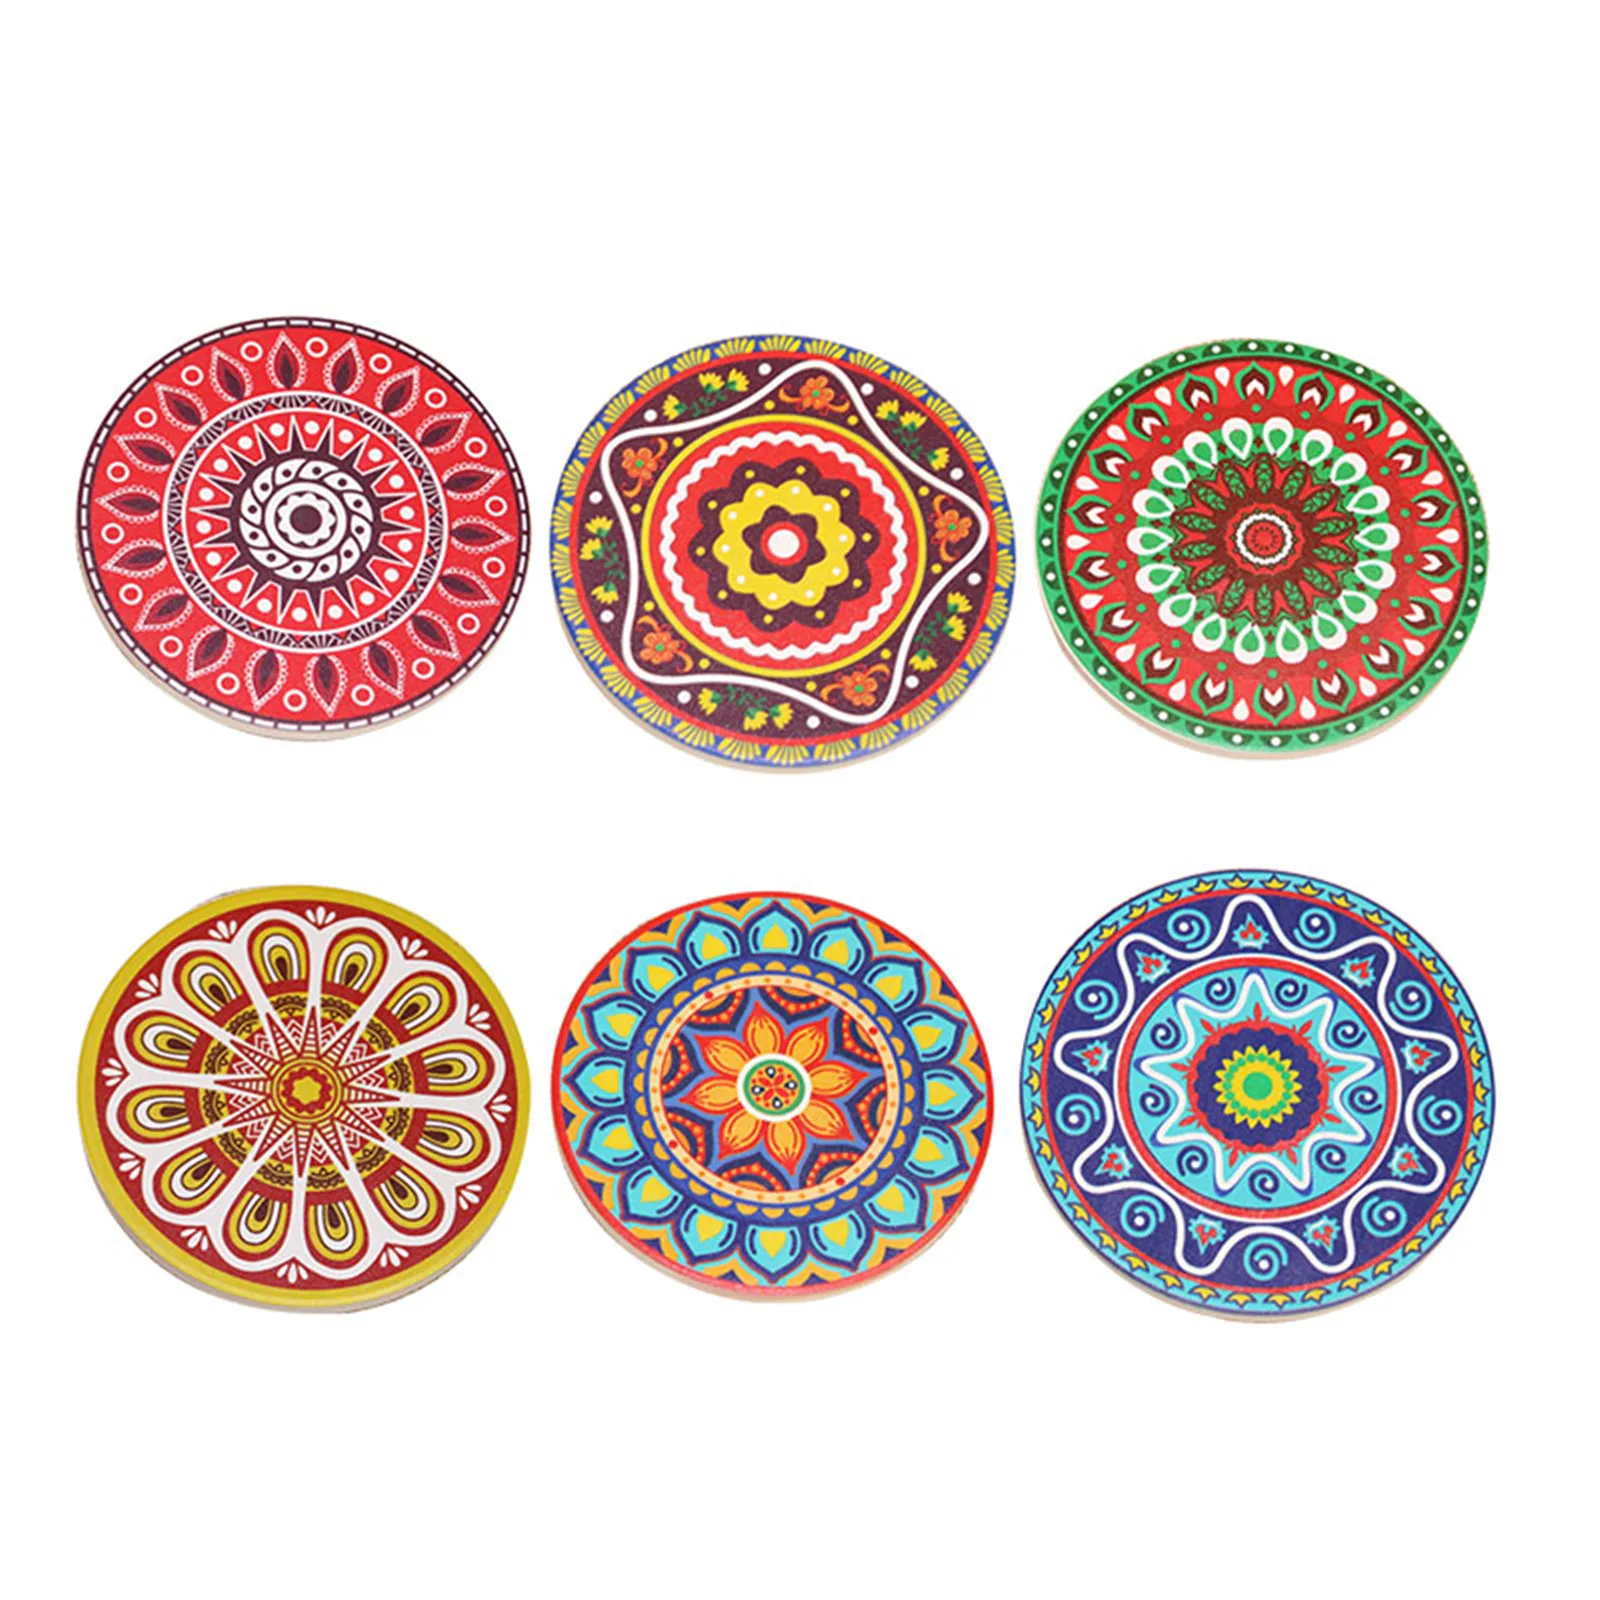 6pcs/set Ceramic Coasters Cartoon Round Heat Insulation Placemat Absorbent Non-slip Cup Pad Kitchen Table Decoration Mats